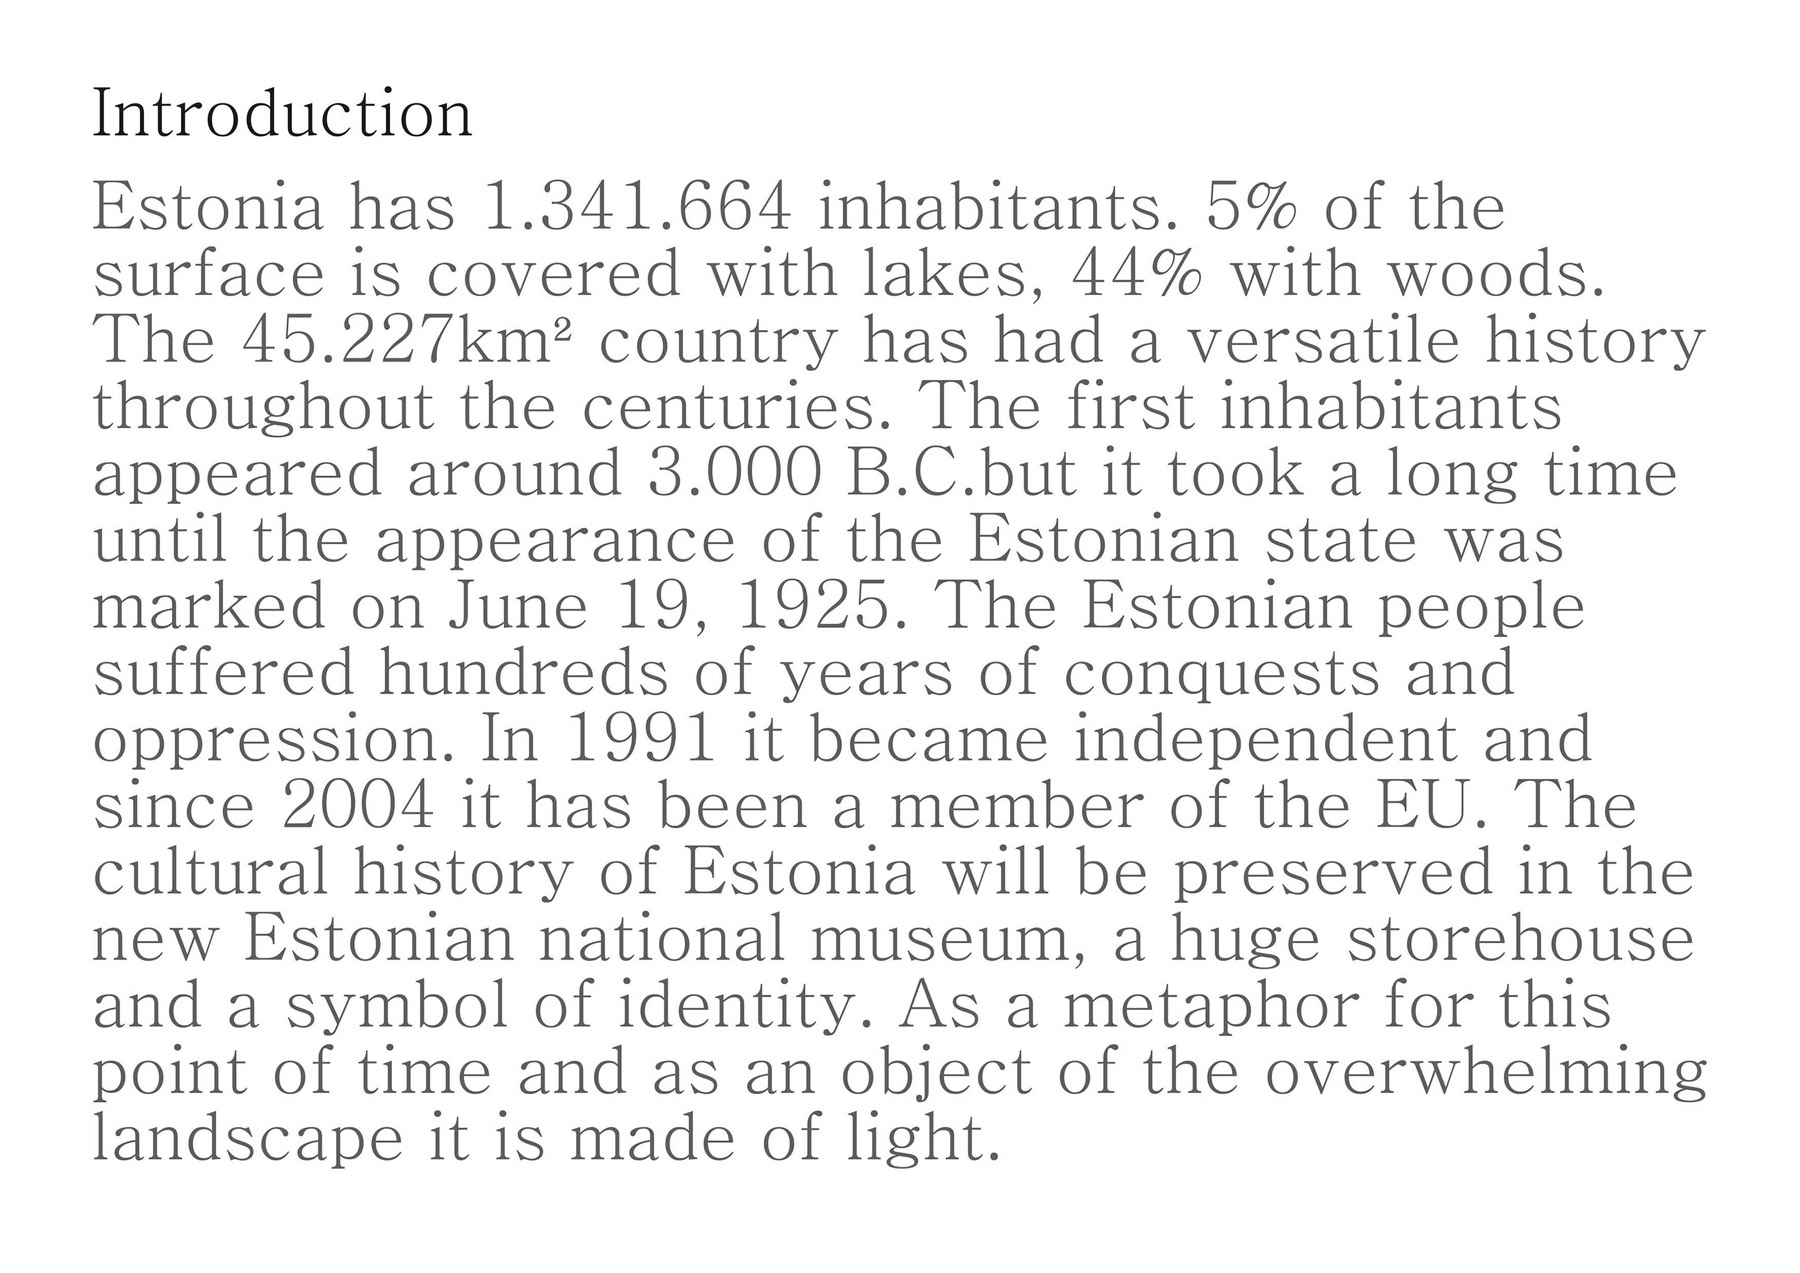 009_ENM_Estonian_National_Museum_Slide_04